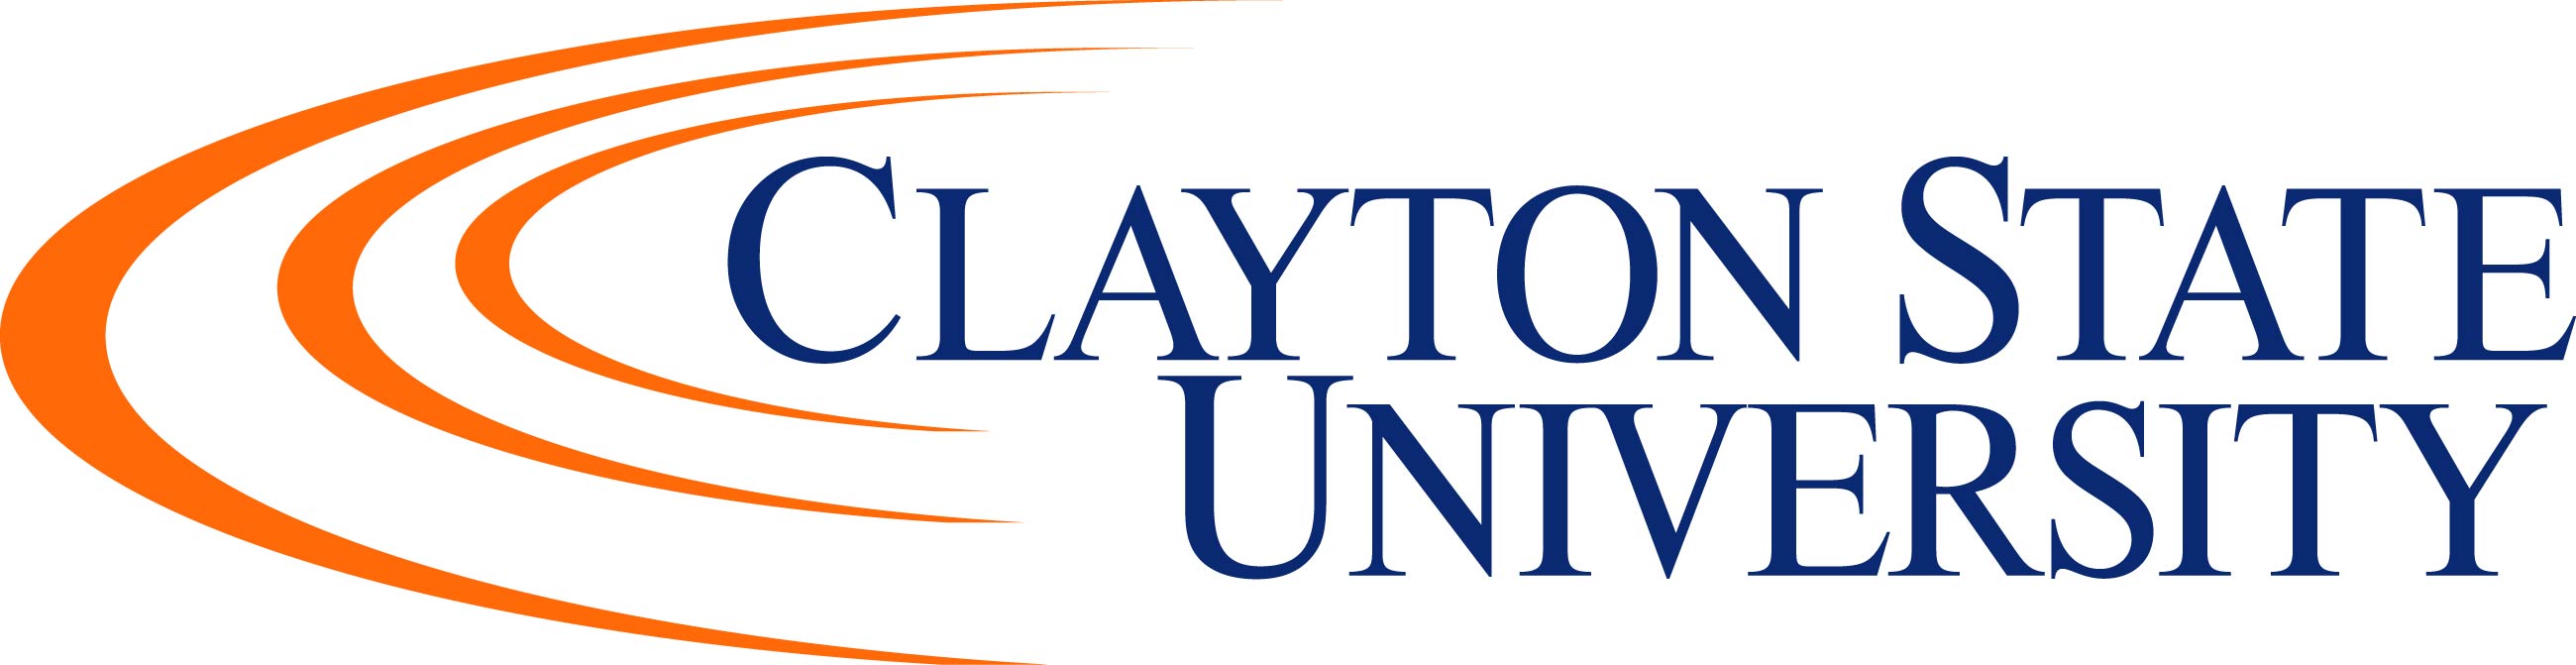 Clayton State University Logo photo - 1